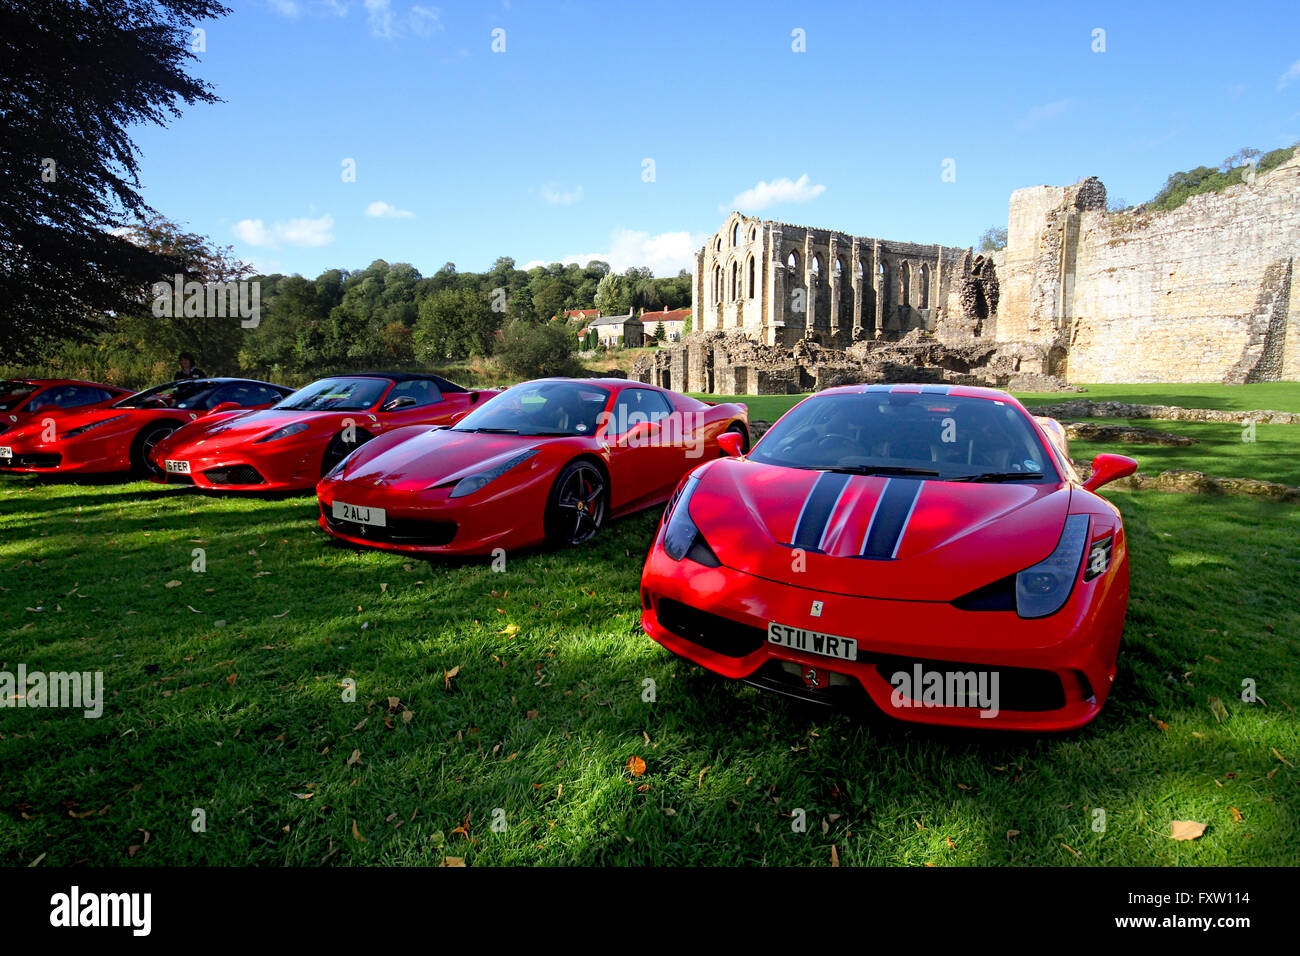 ROTER FERRARI 458 ITALIA 16M 458 SPIDER 458 SPECIALE Autos RIEVAULX Abtei NORTH YORKSHIRE ENGLAND 30. August 2014 Stockfoto